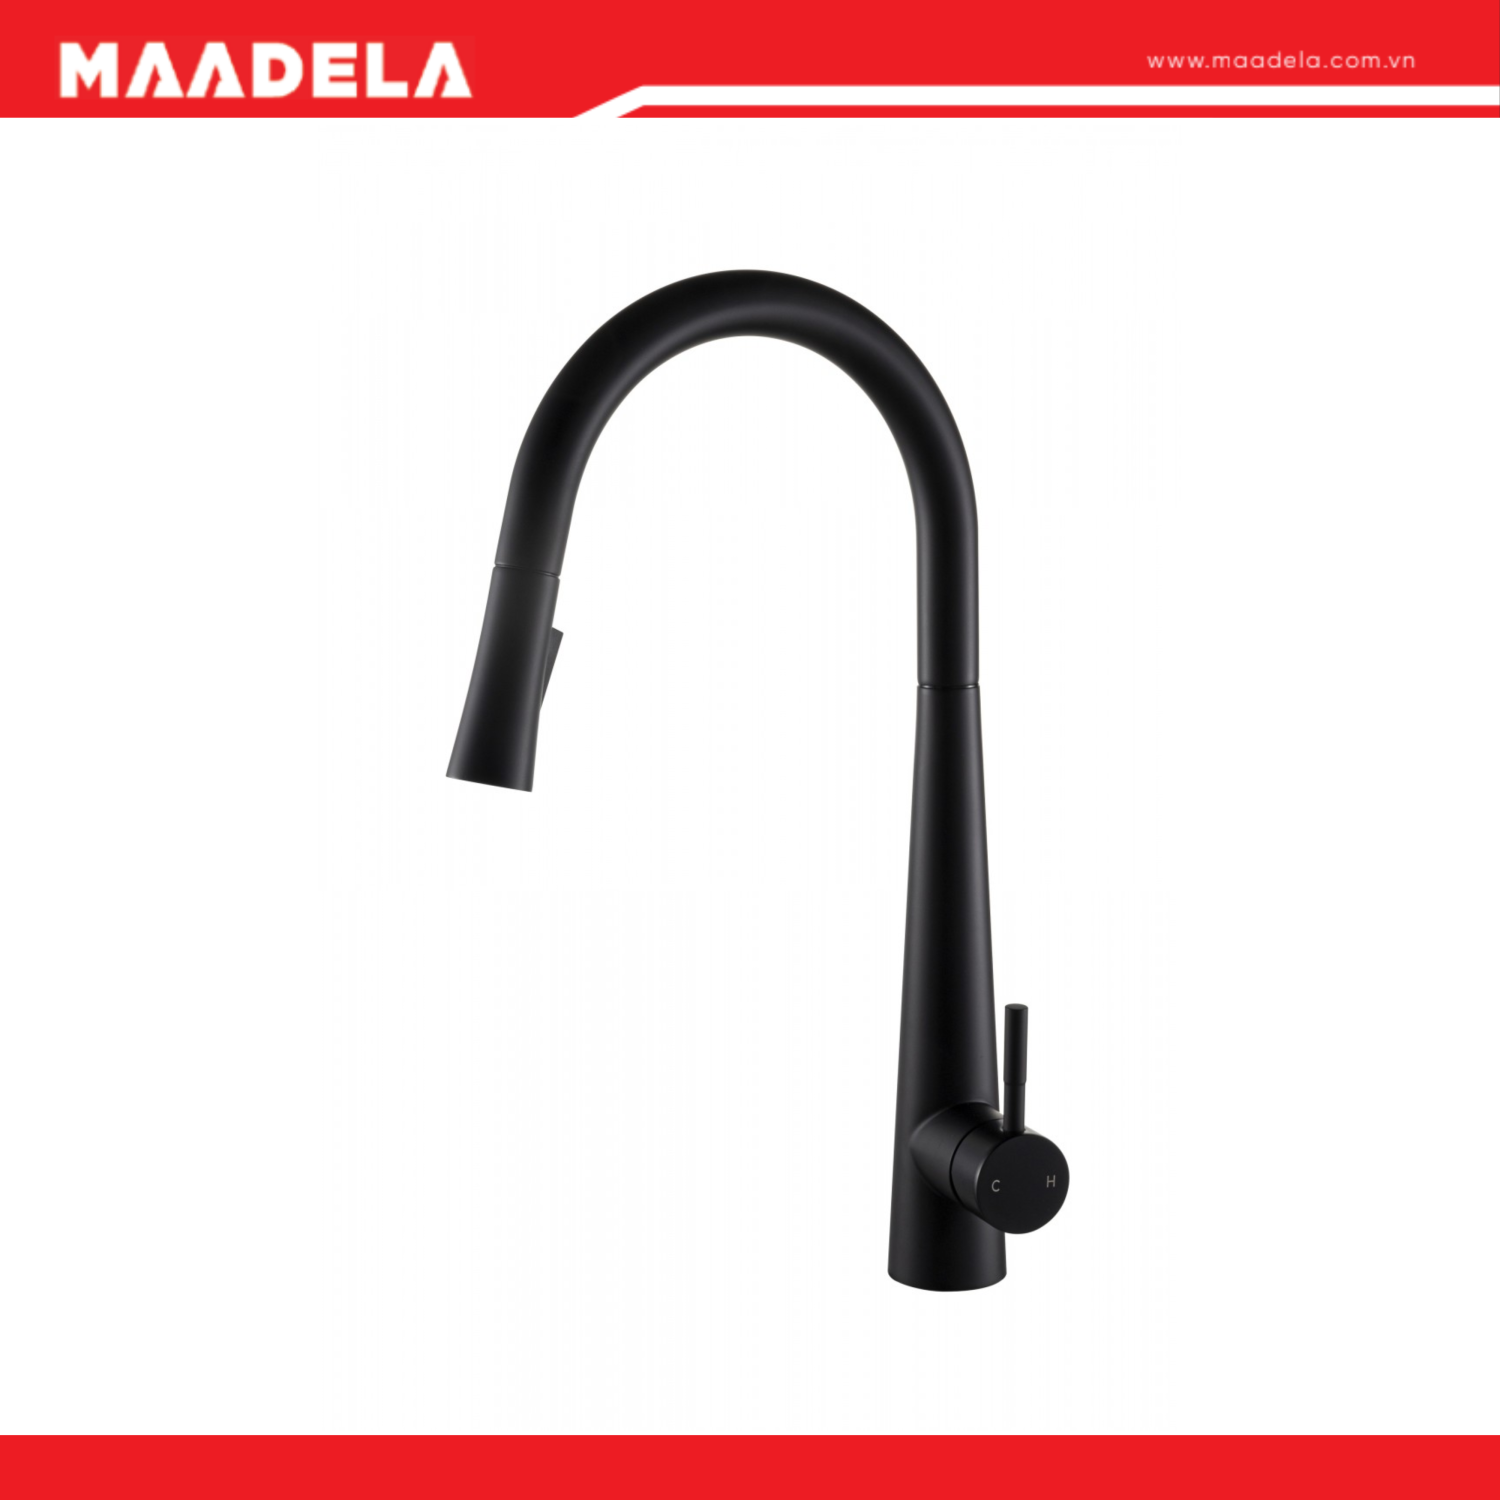 Vòi rửa chén Maadela MDF-149B